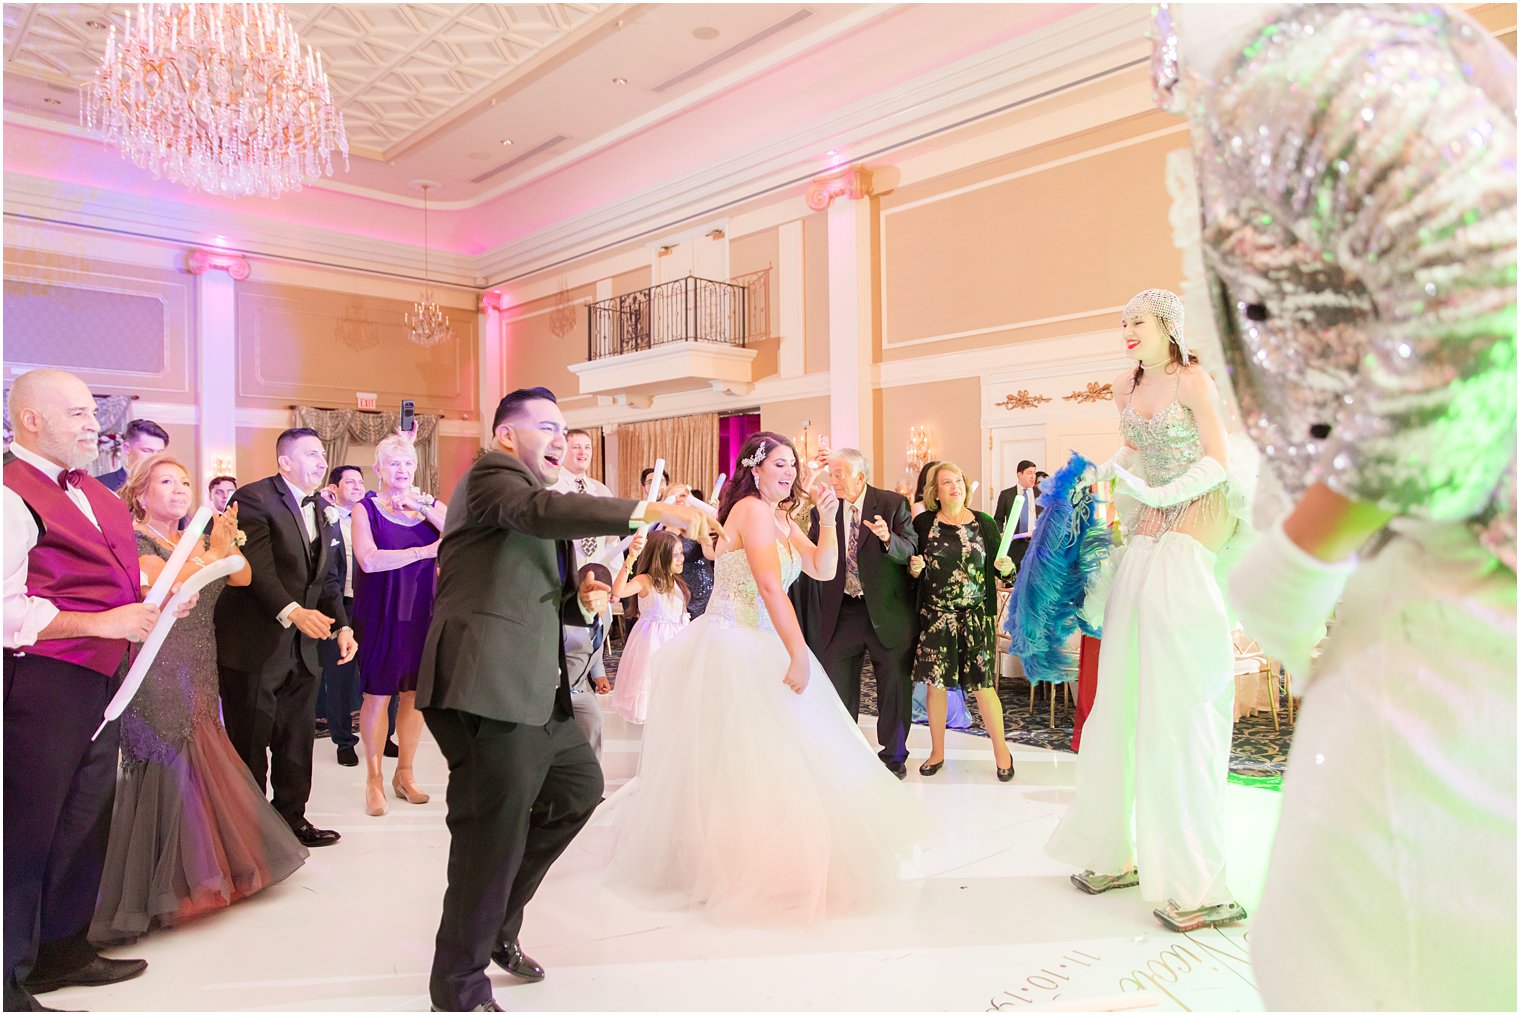 Idalia Photography captures NJ wedding entertainment